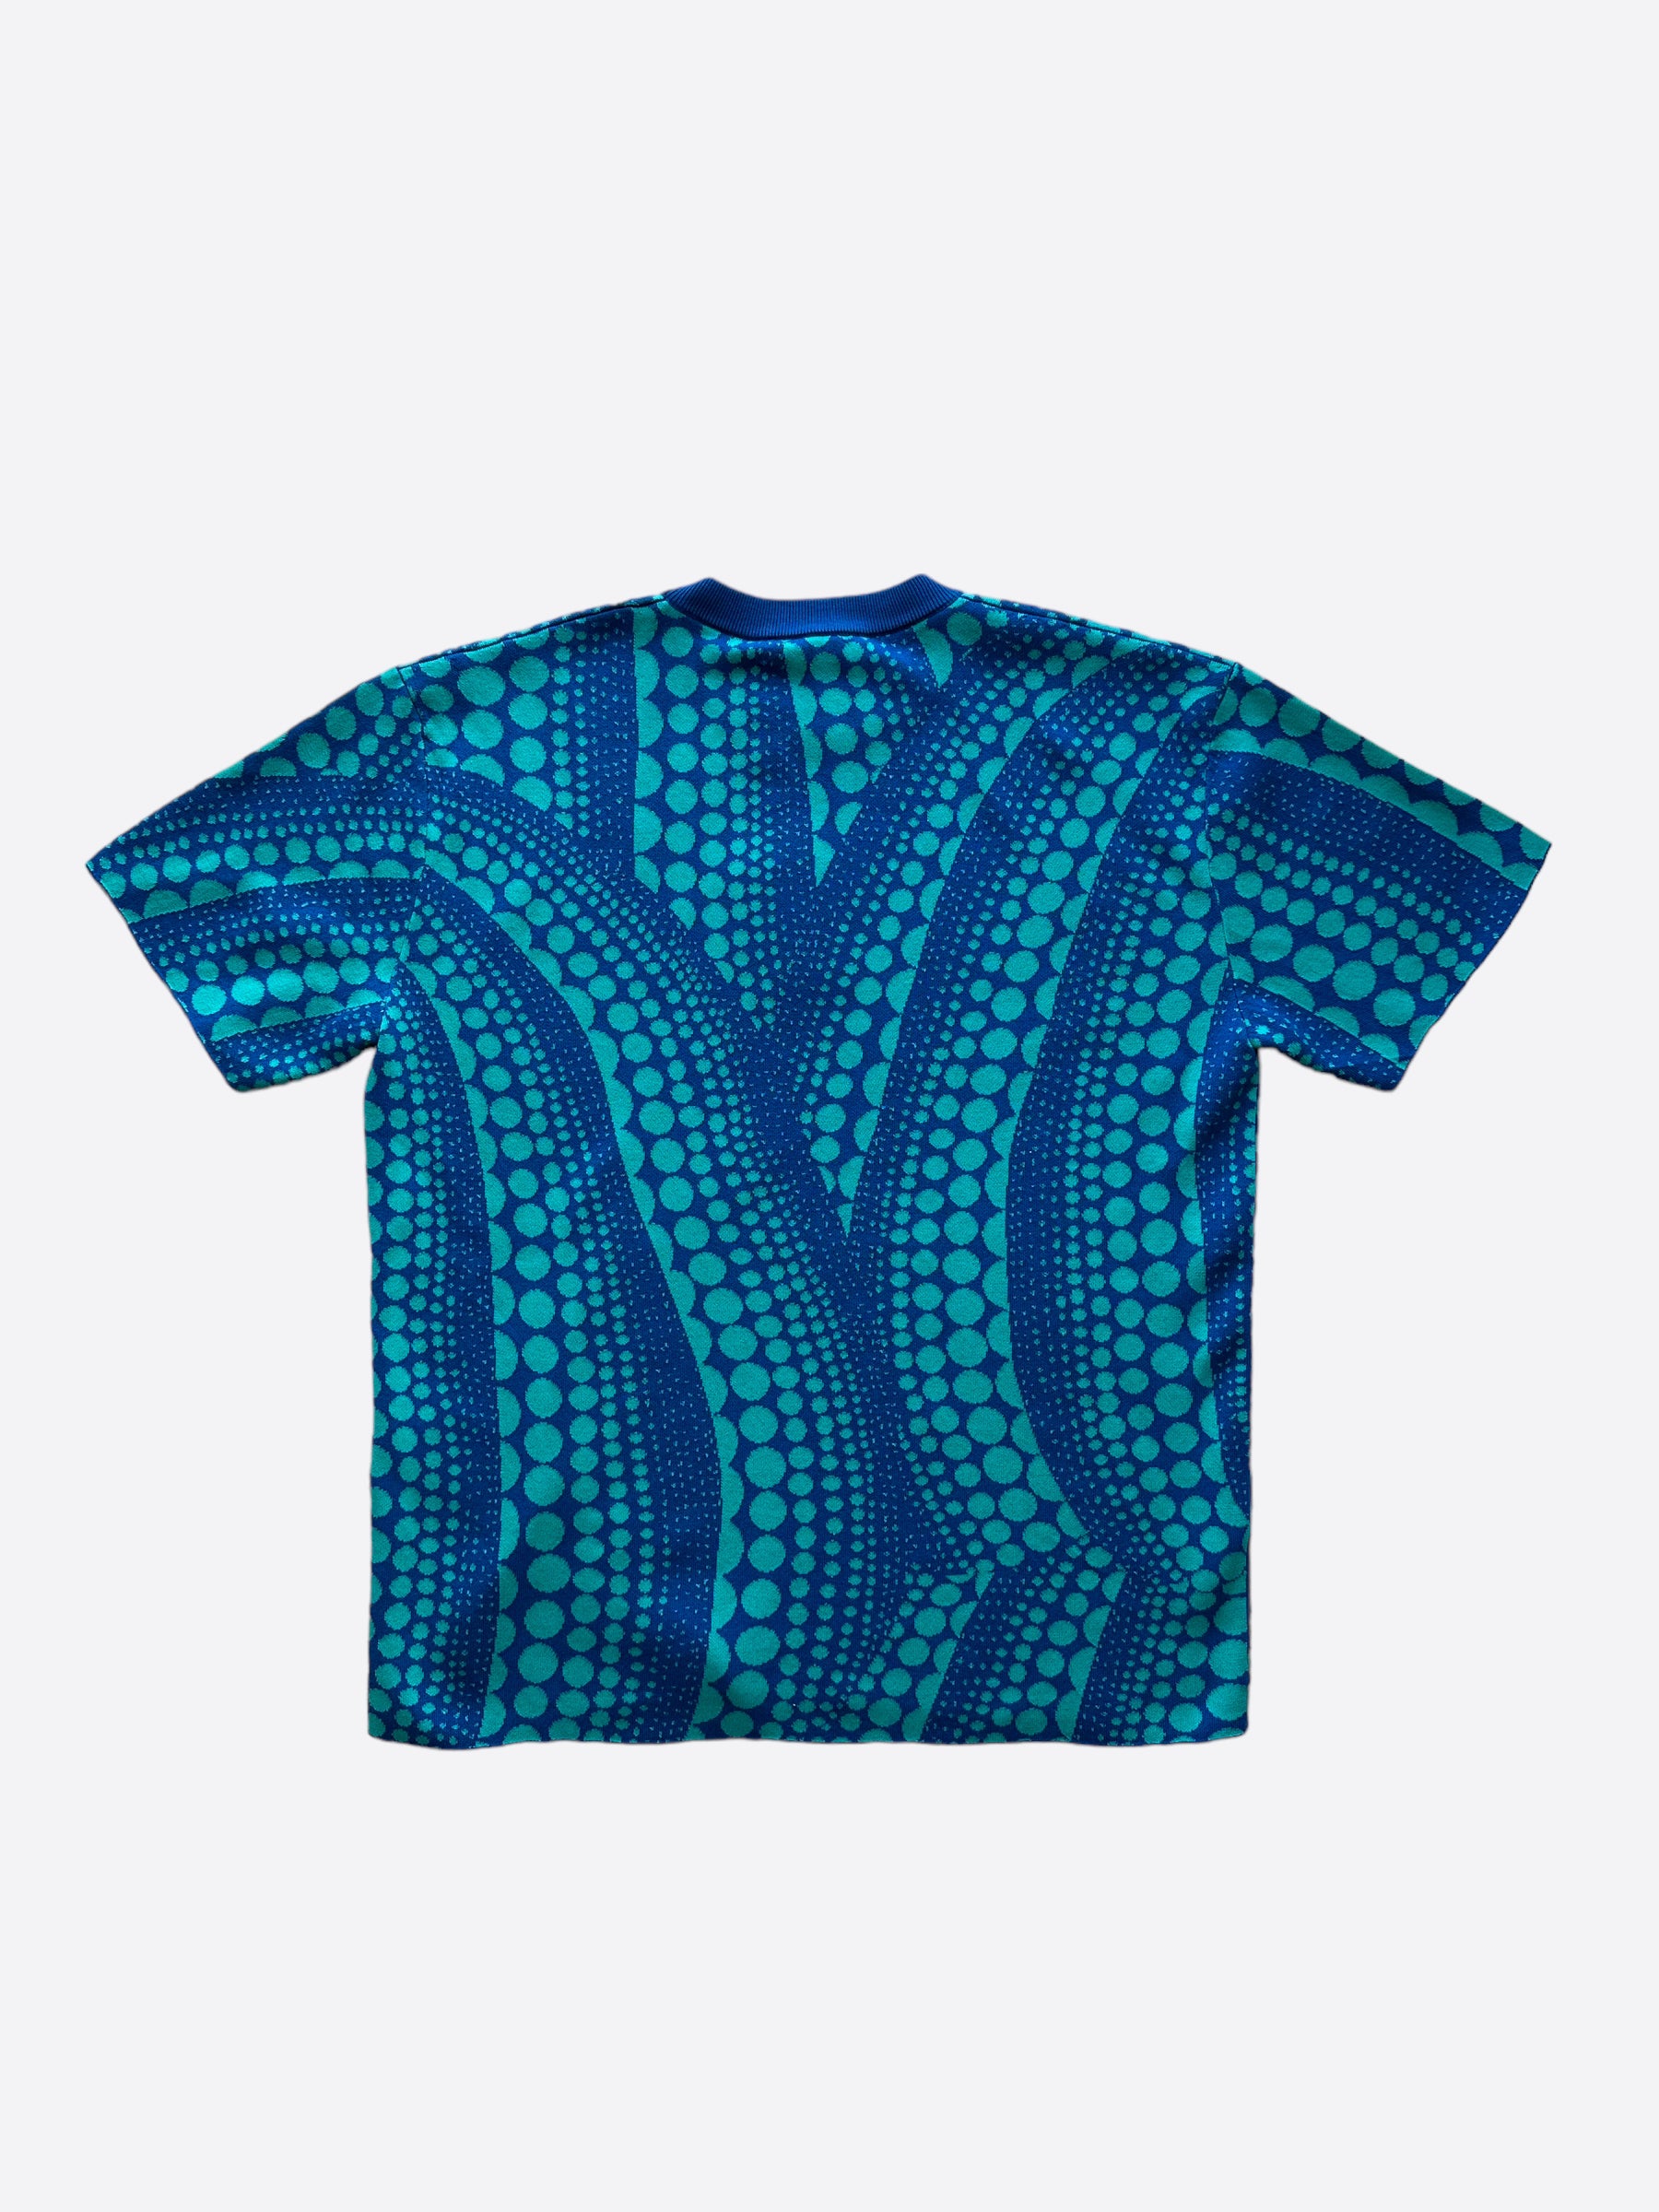 Louis Vuitton Regular Size S T-Shirts for Men for sale